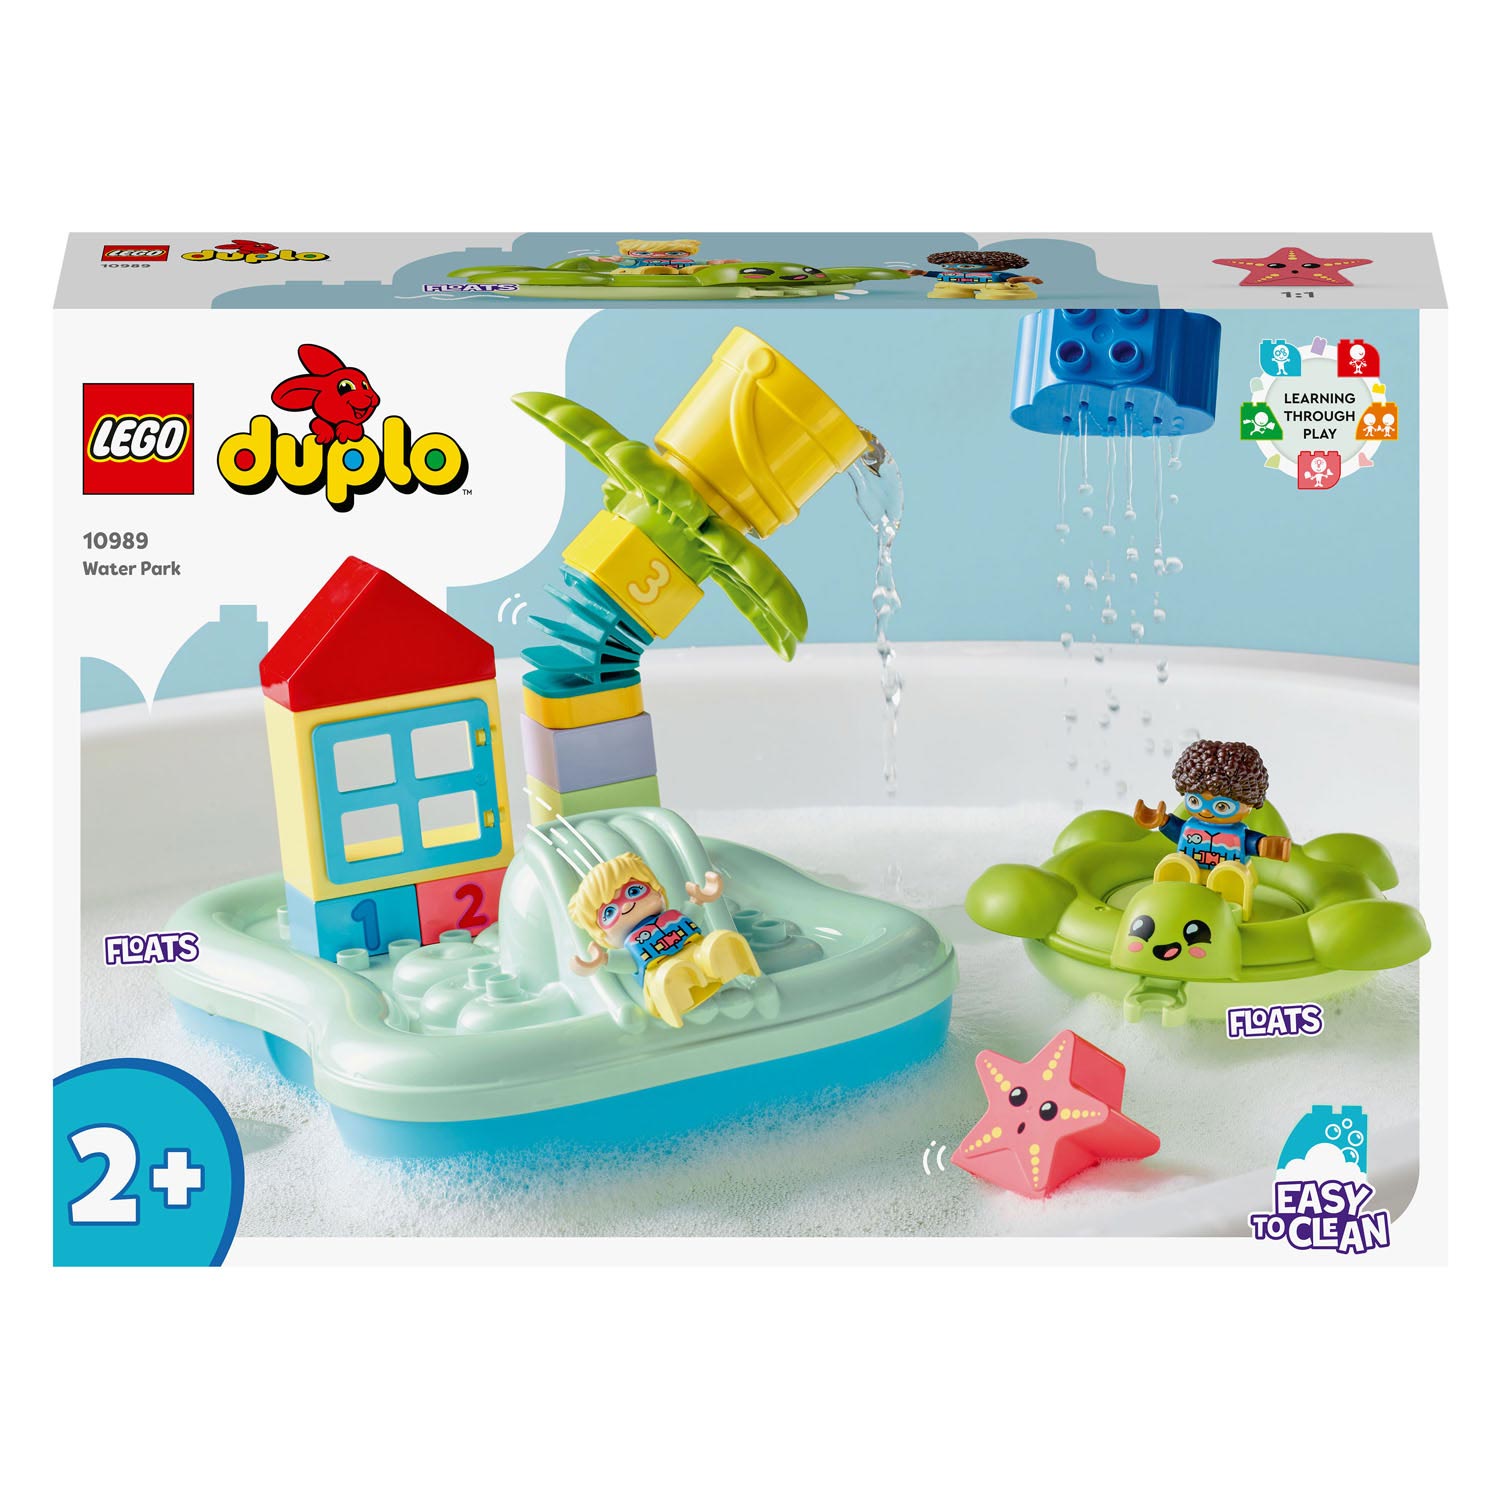 LEGO Duplo Town 10989 Waterpark